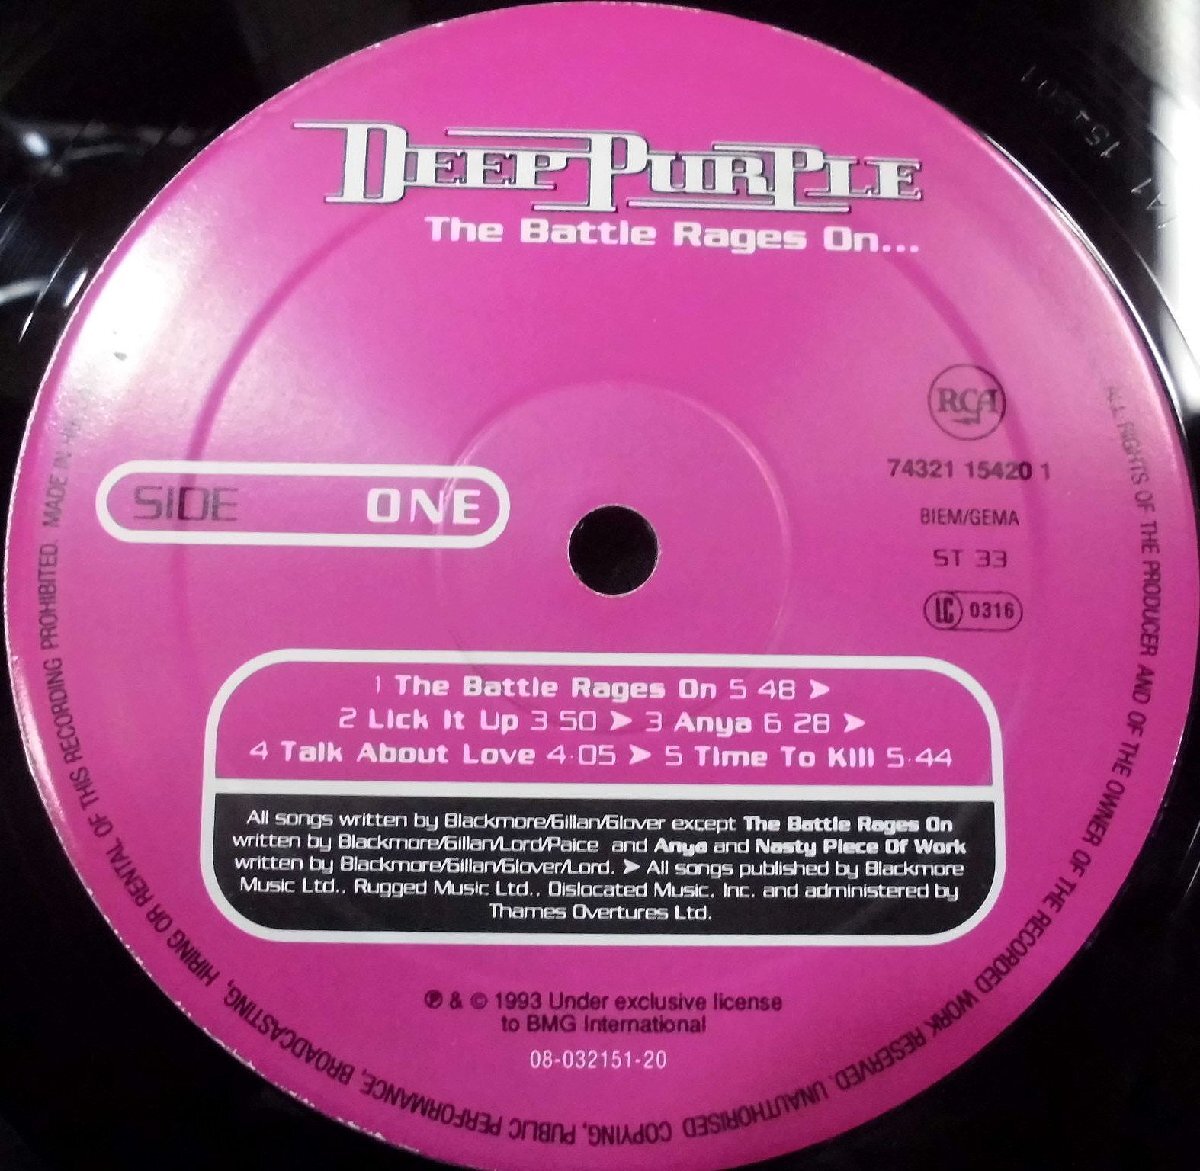 ●EU-RCA,BMGオリジナル””’93希少アナログ!!”” Deep Purple / The Battle Rages On..._画像7